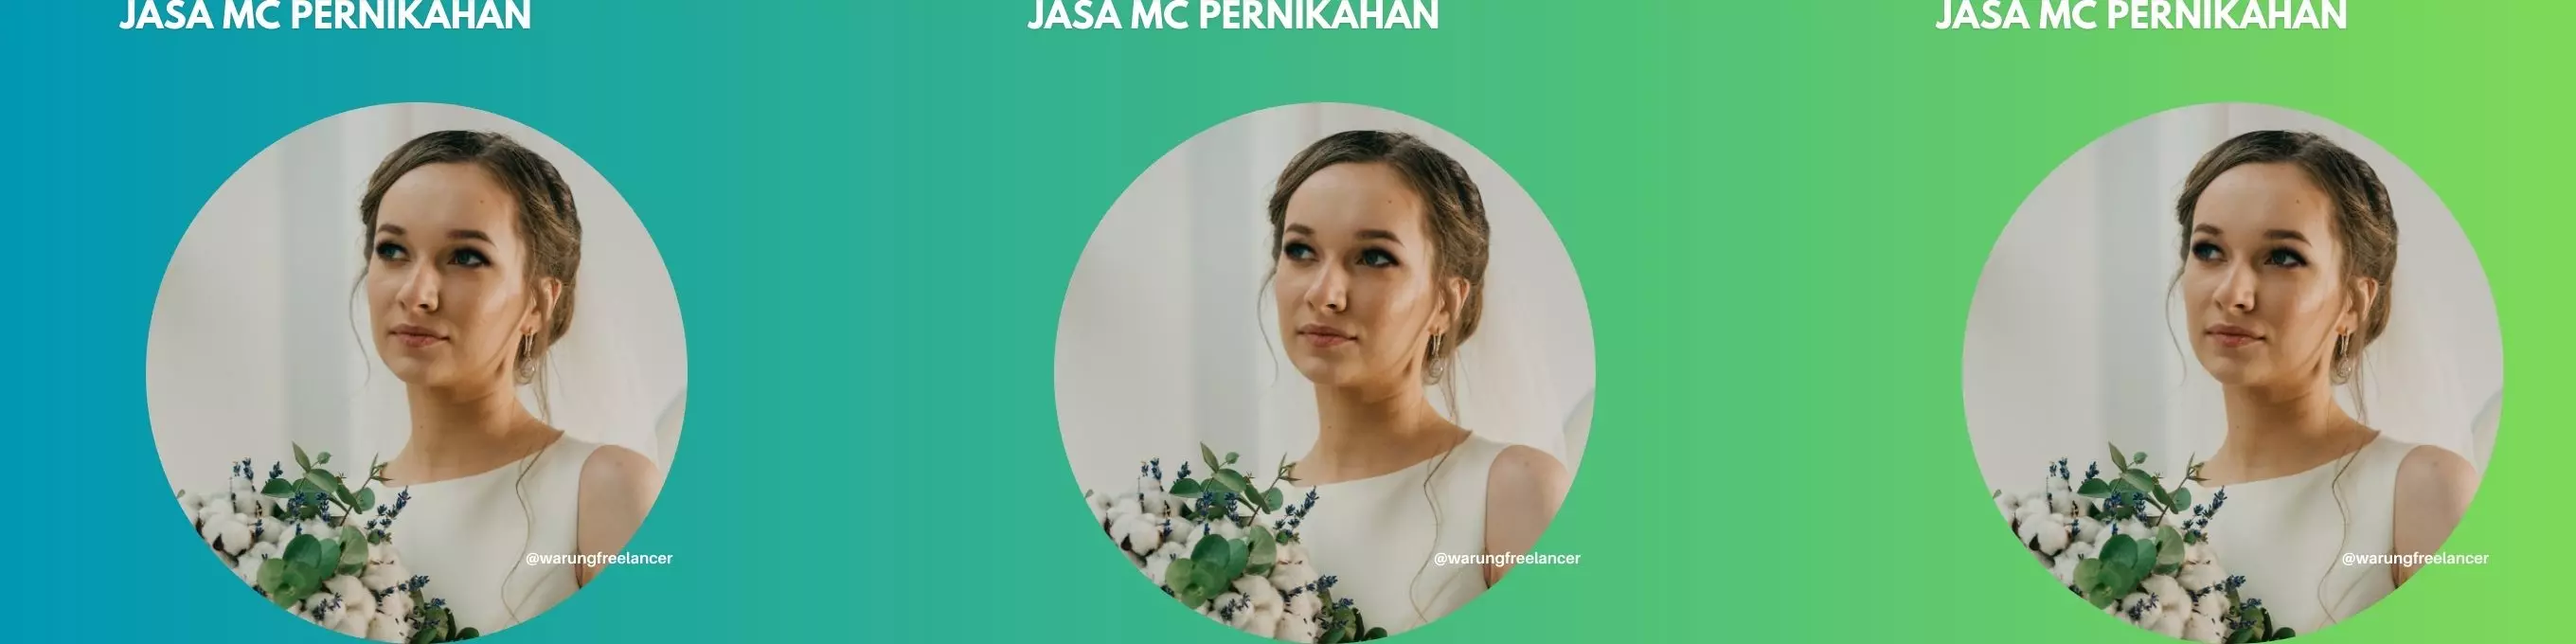 Jasa MC Pernikahan